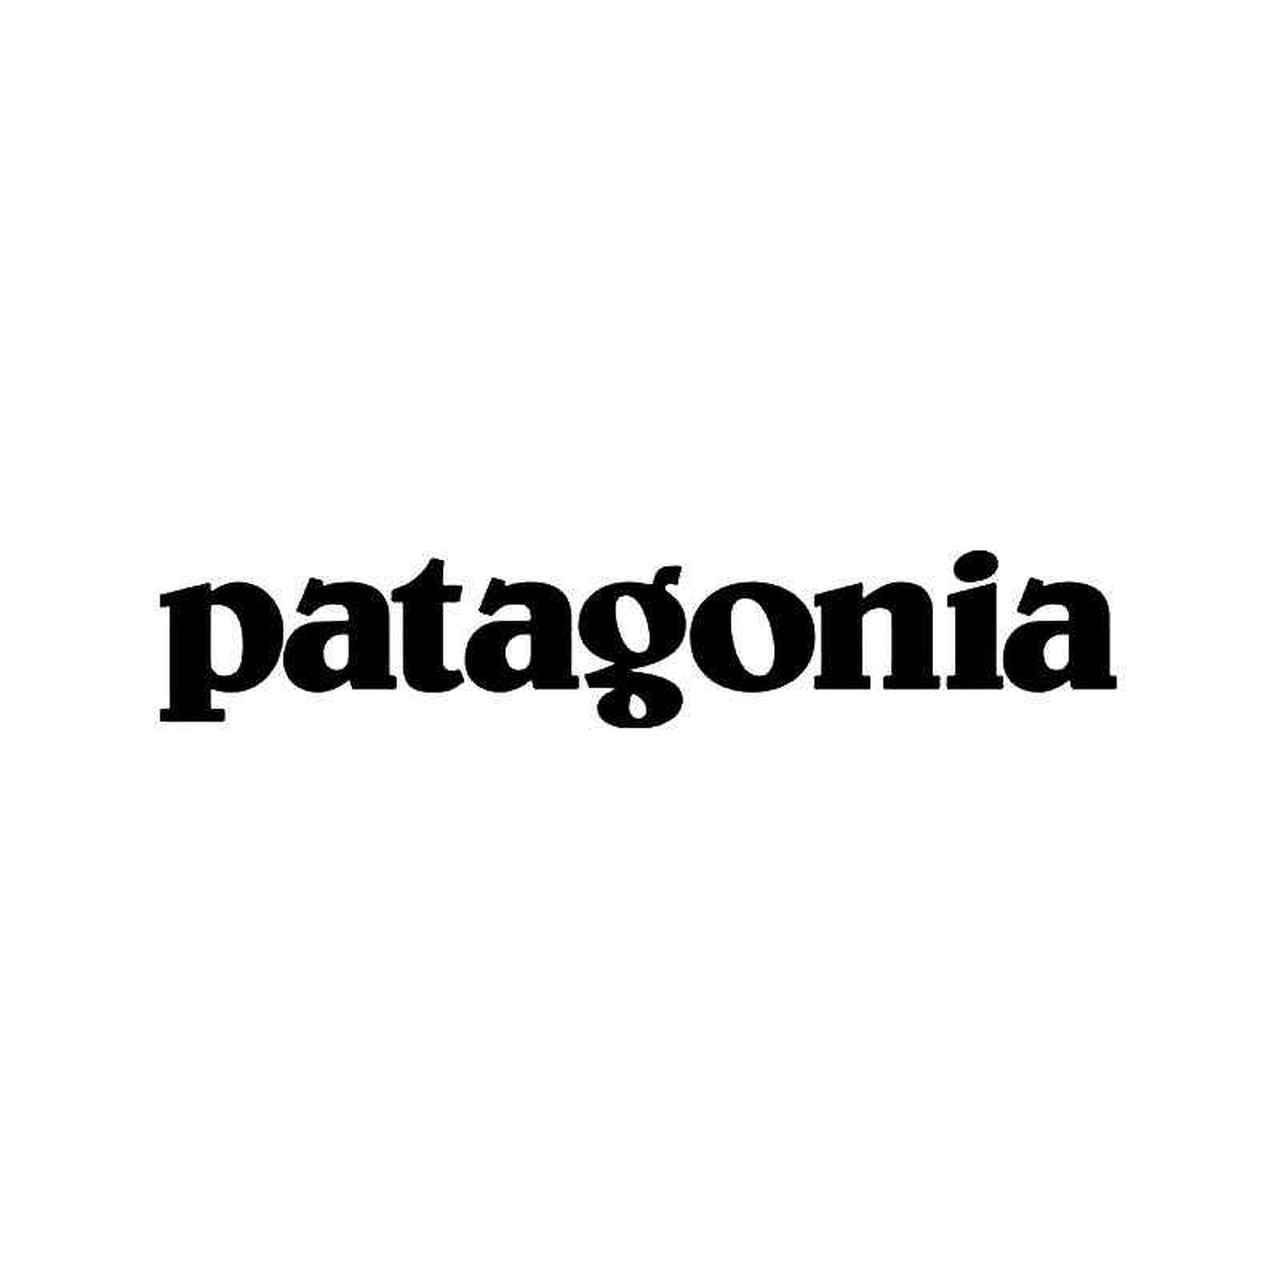 Promo codes Patagonia